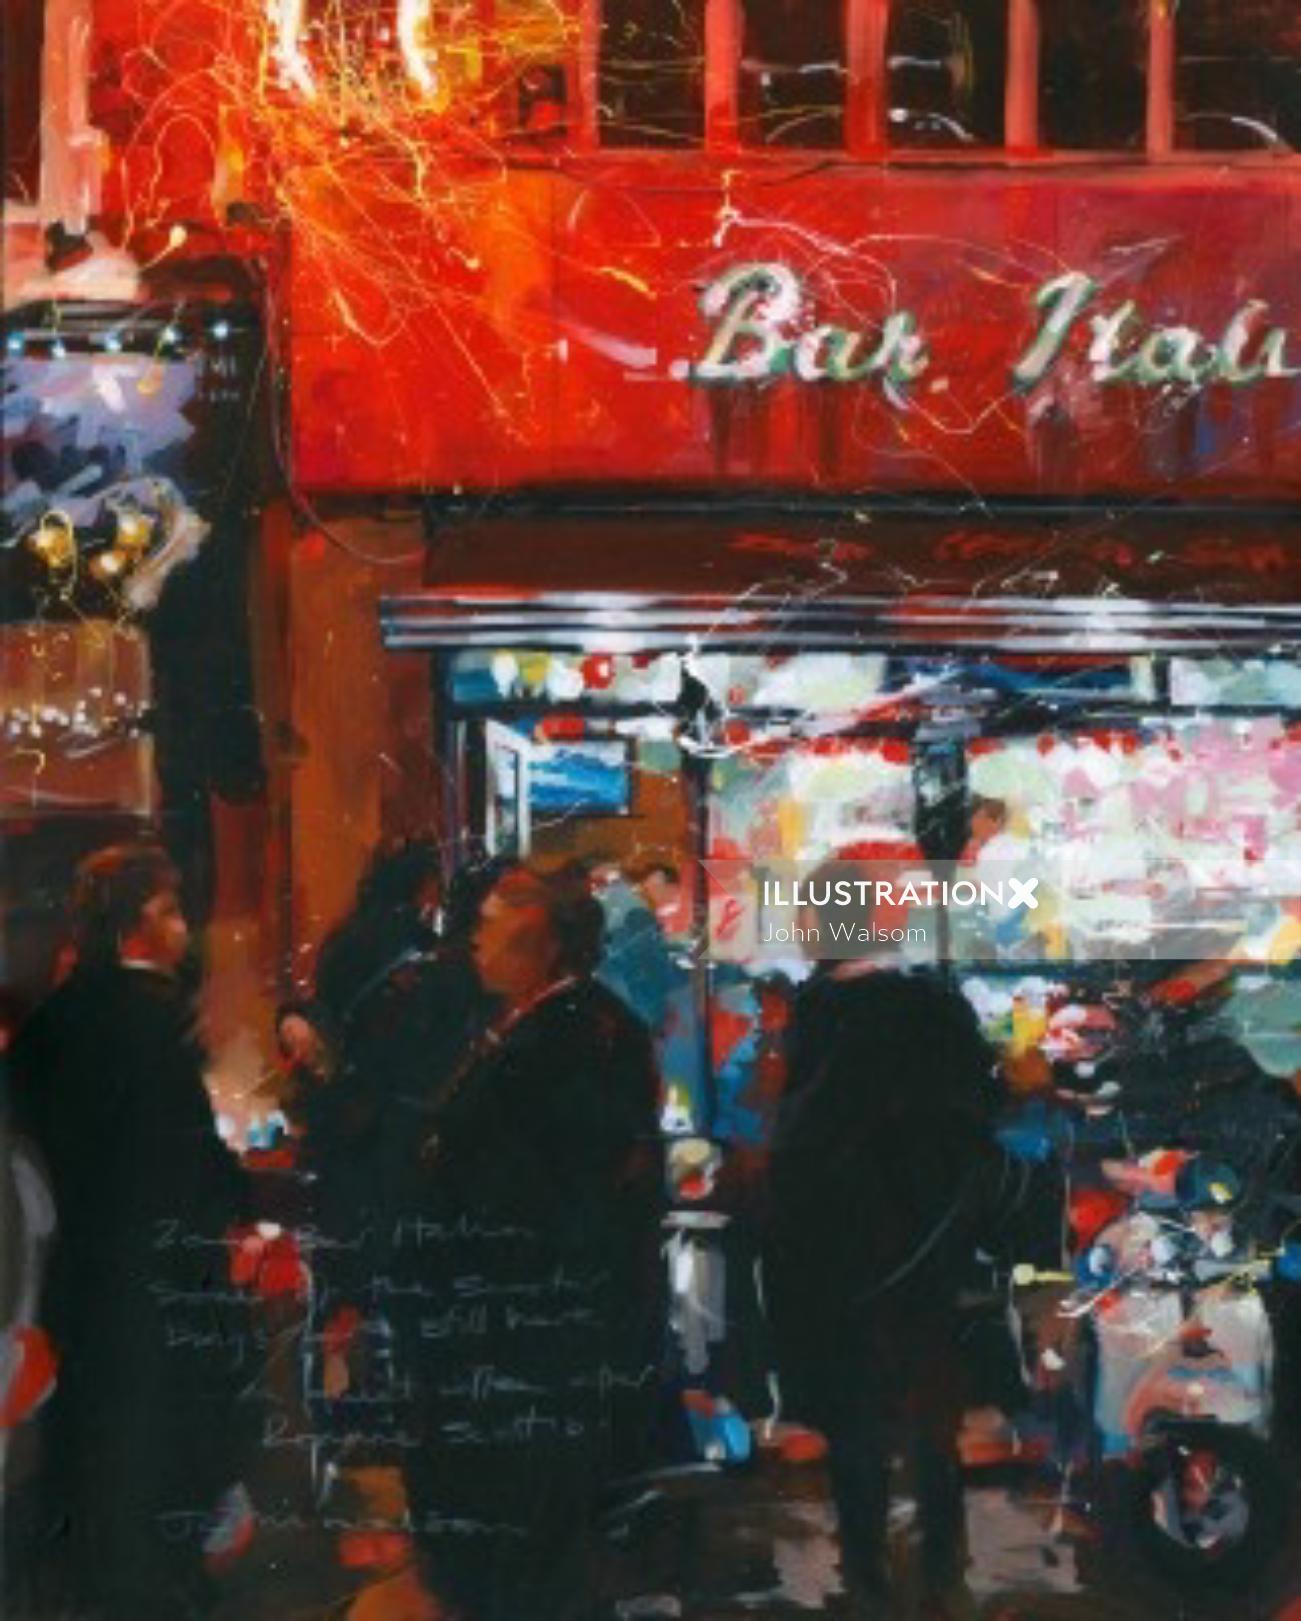 Late night painting of an Italian bar